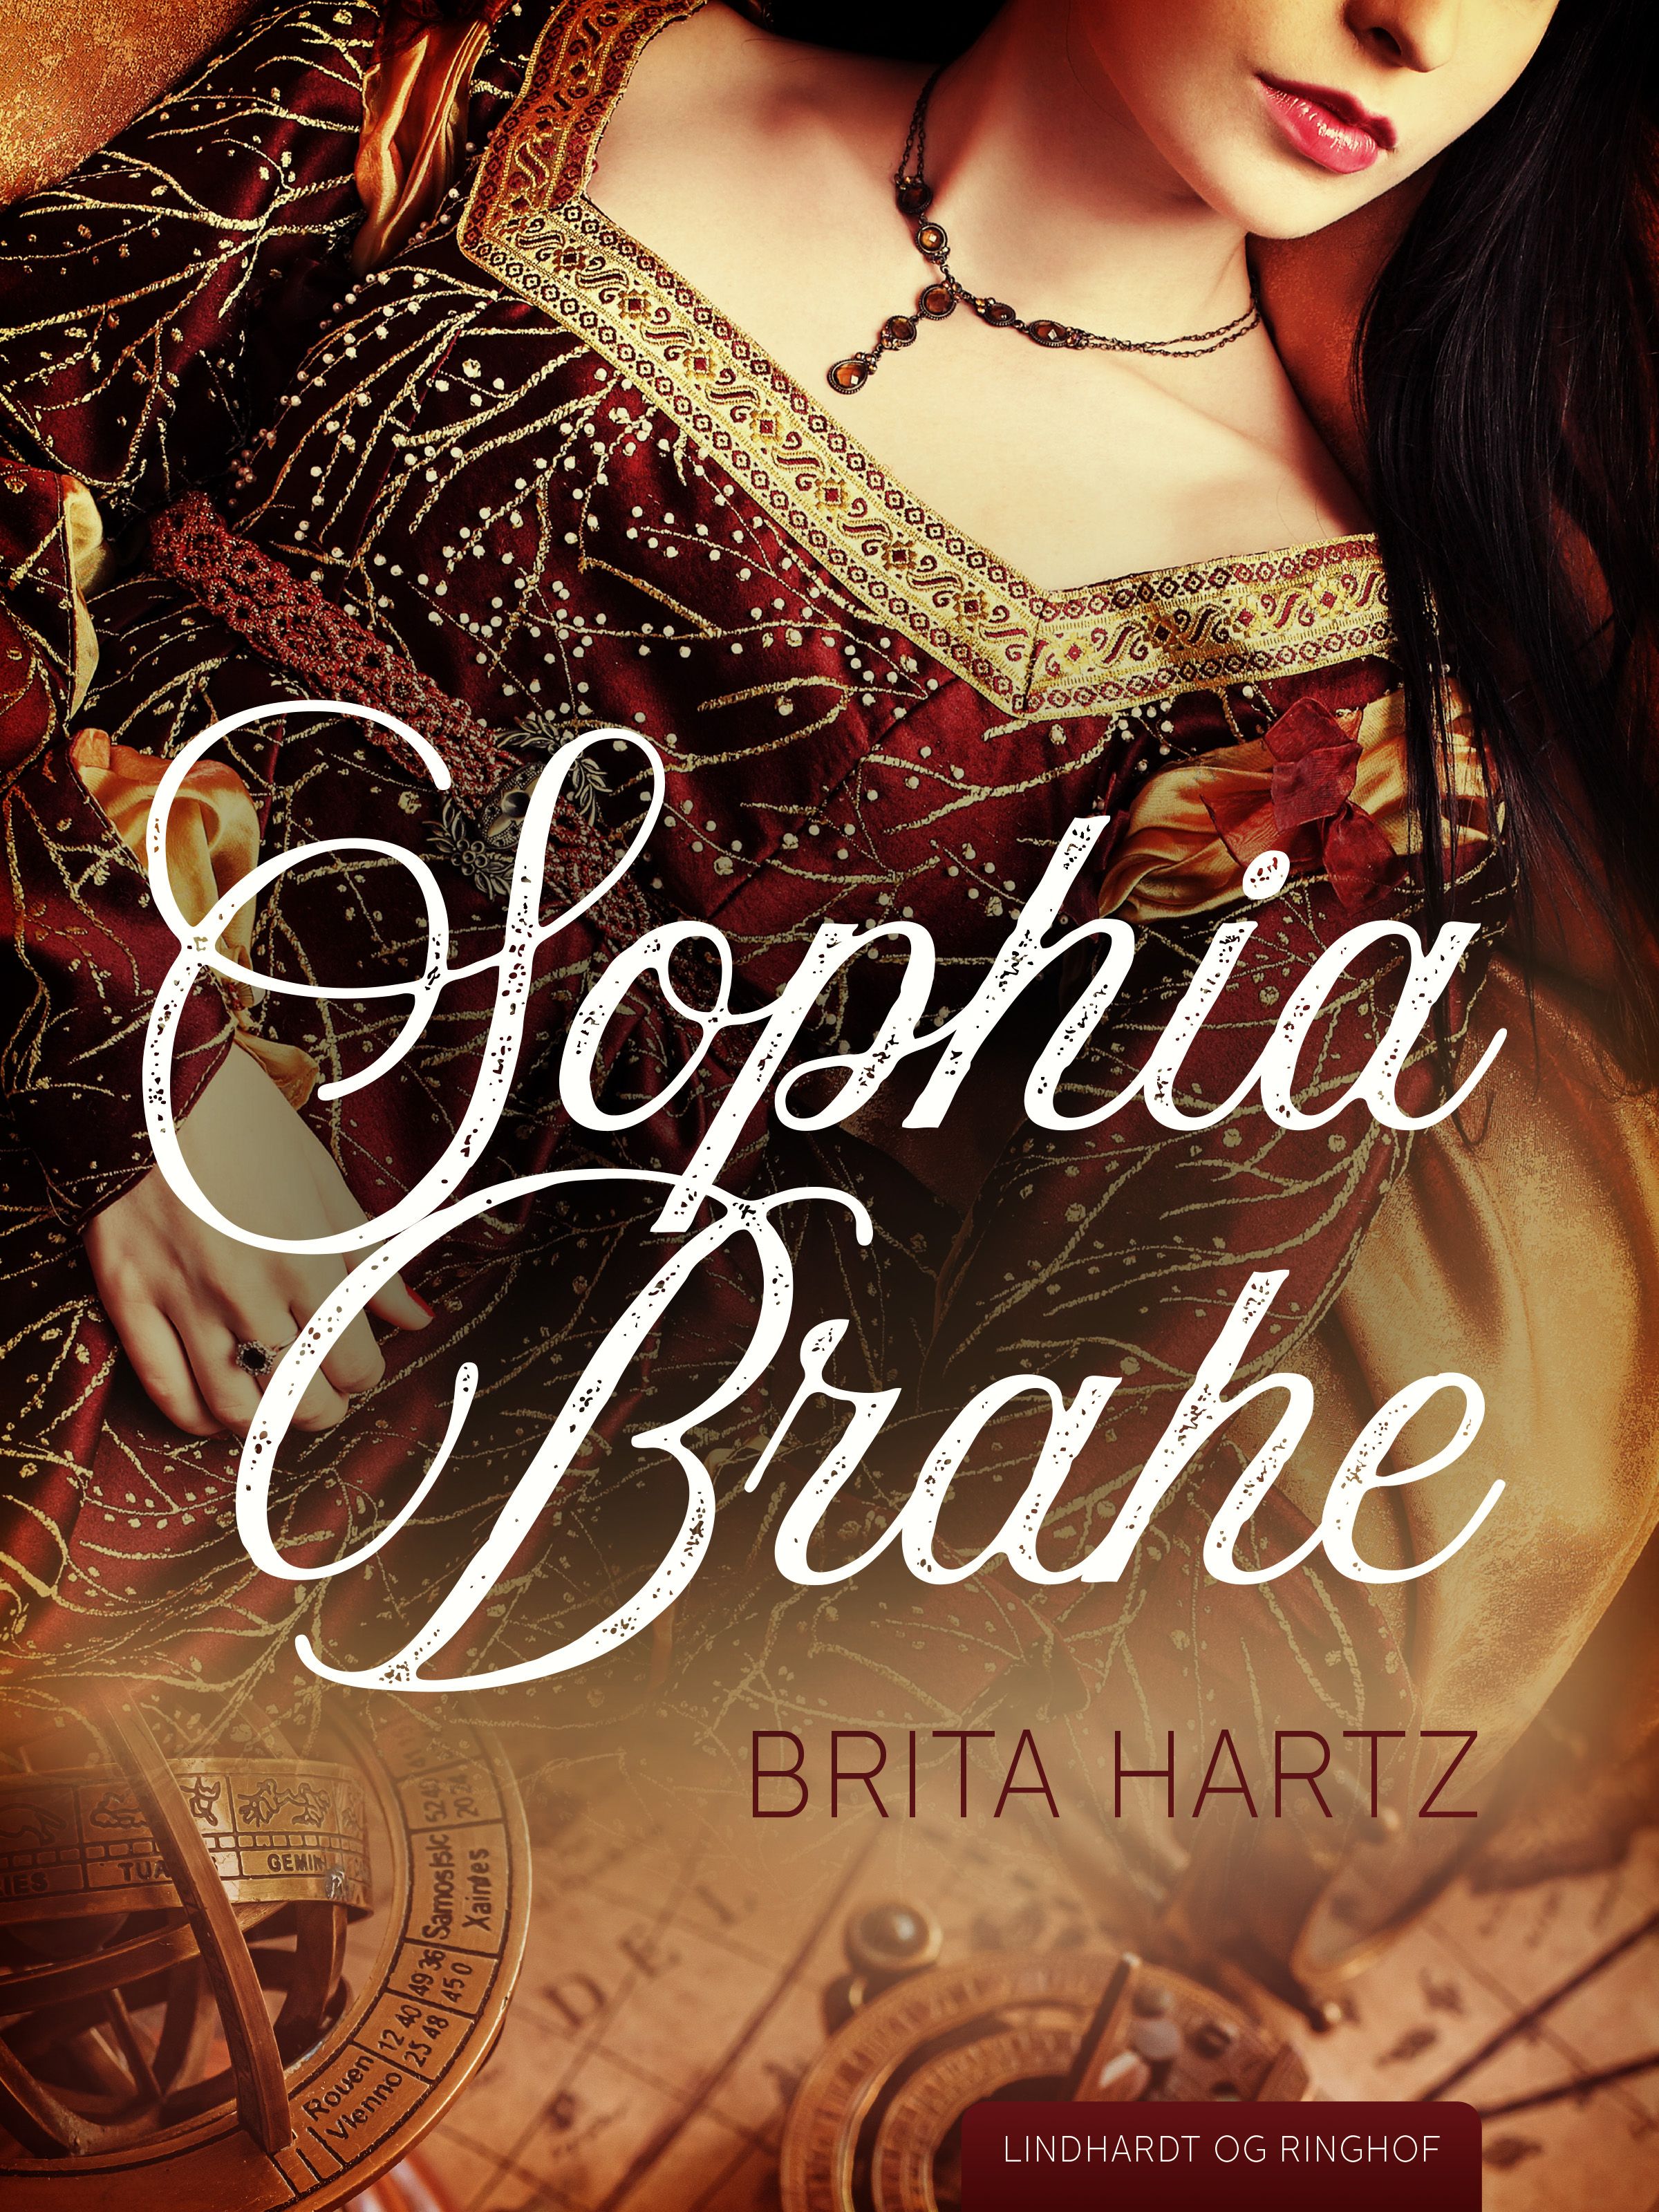 Sophia Brahe, e-bog af Brita Hartz